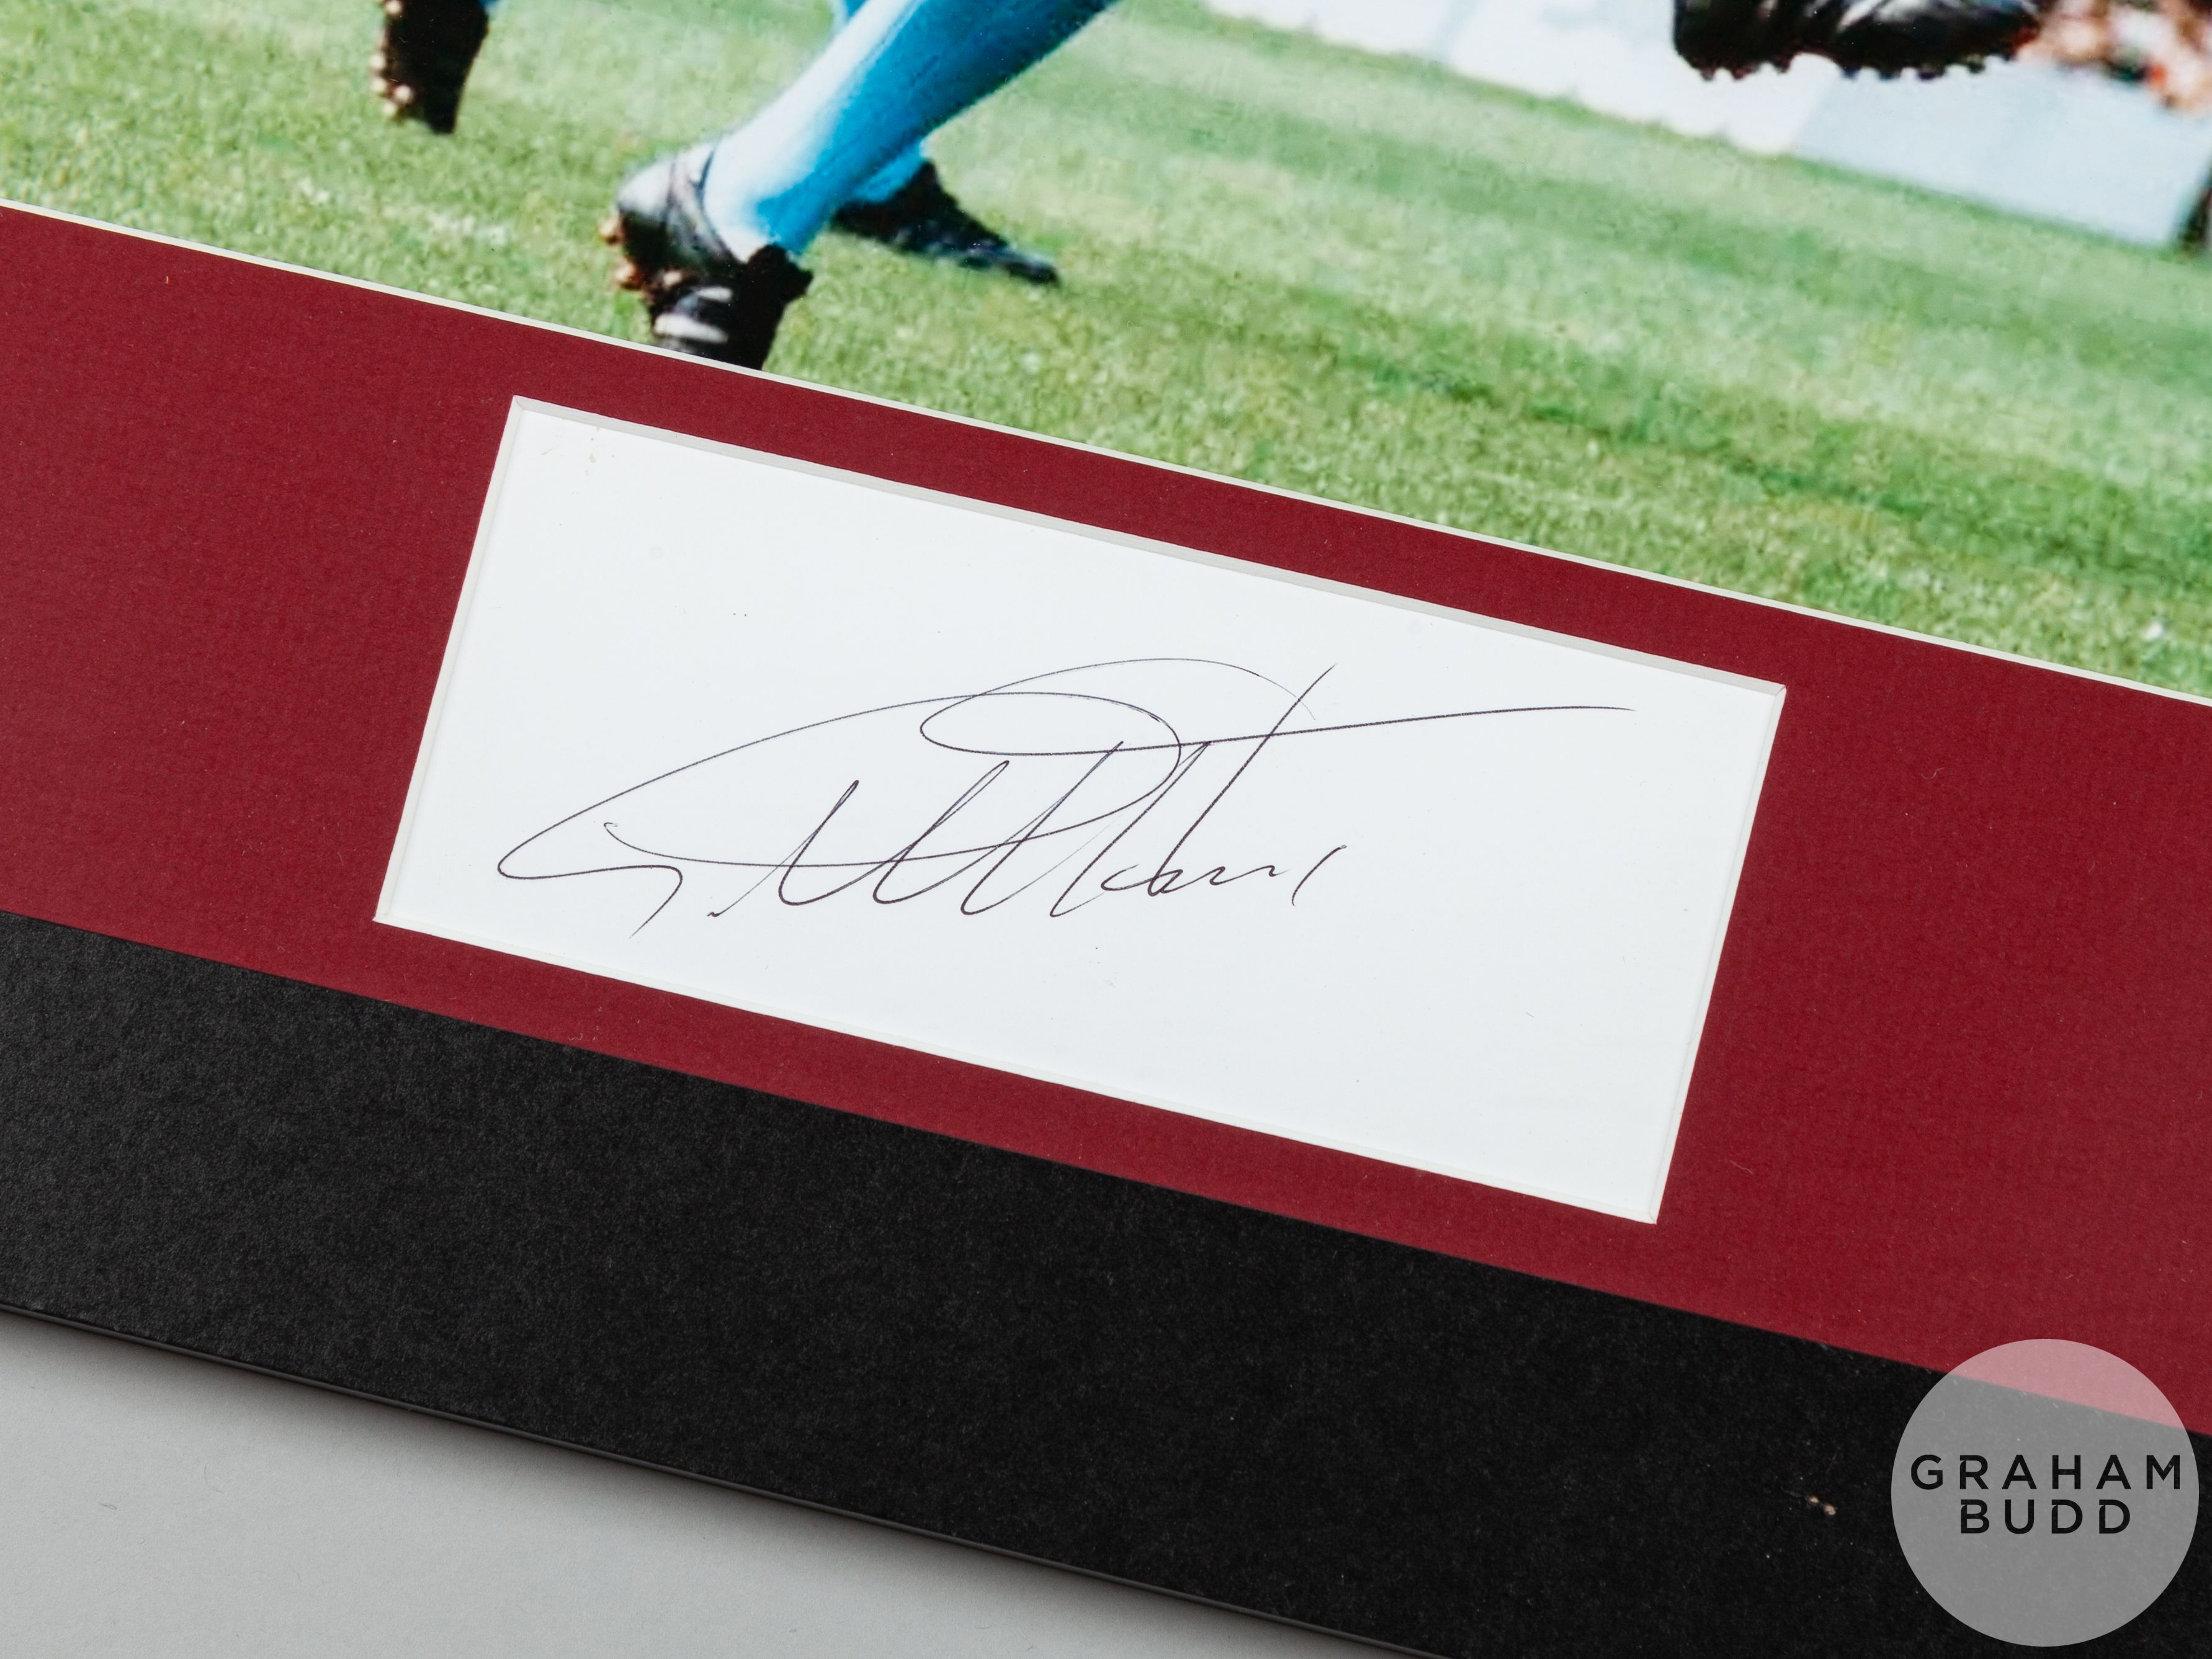 Geoff Hurst signed West Ham framed photographic display, - Image 2 of 2